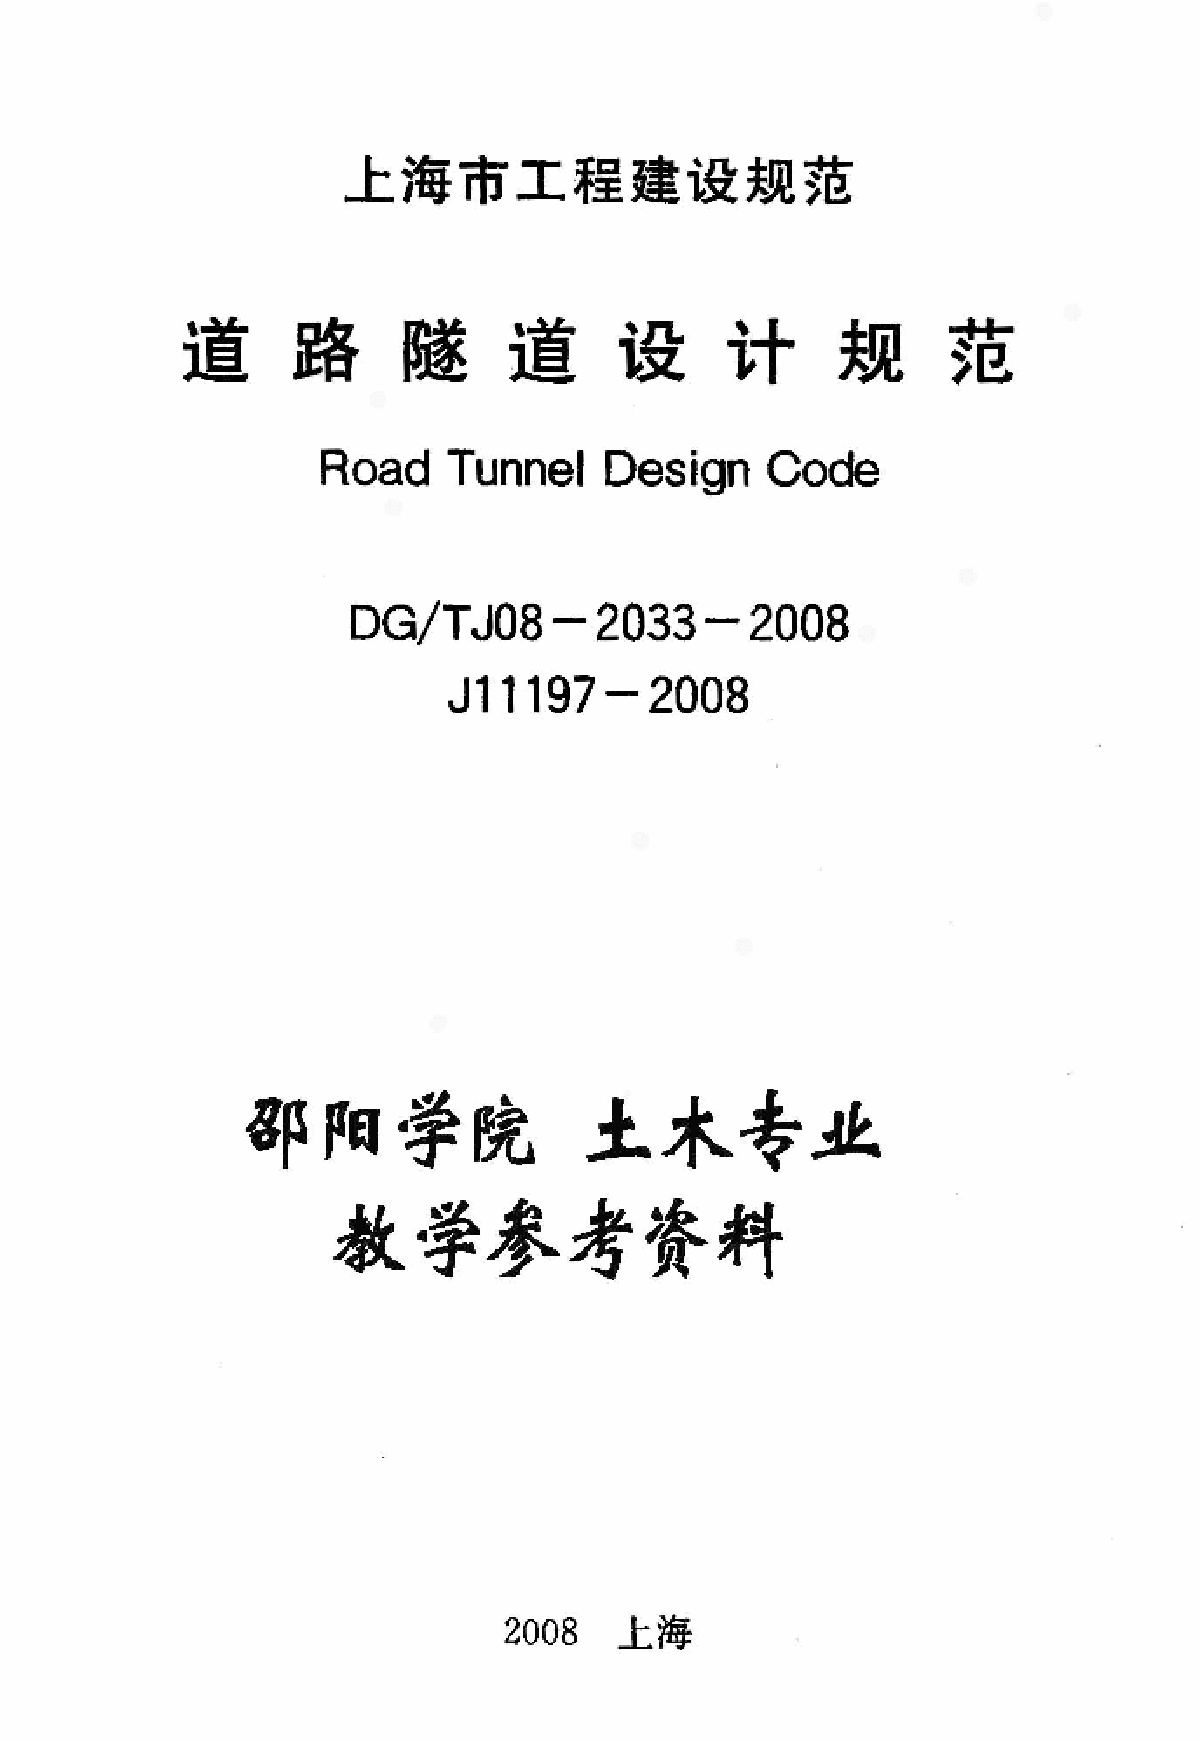 DGTJ08-2033-2008 道路隧道设计规范